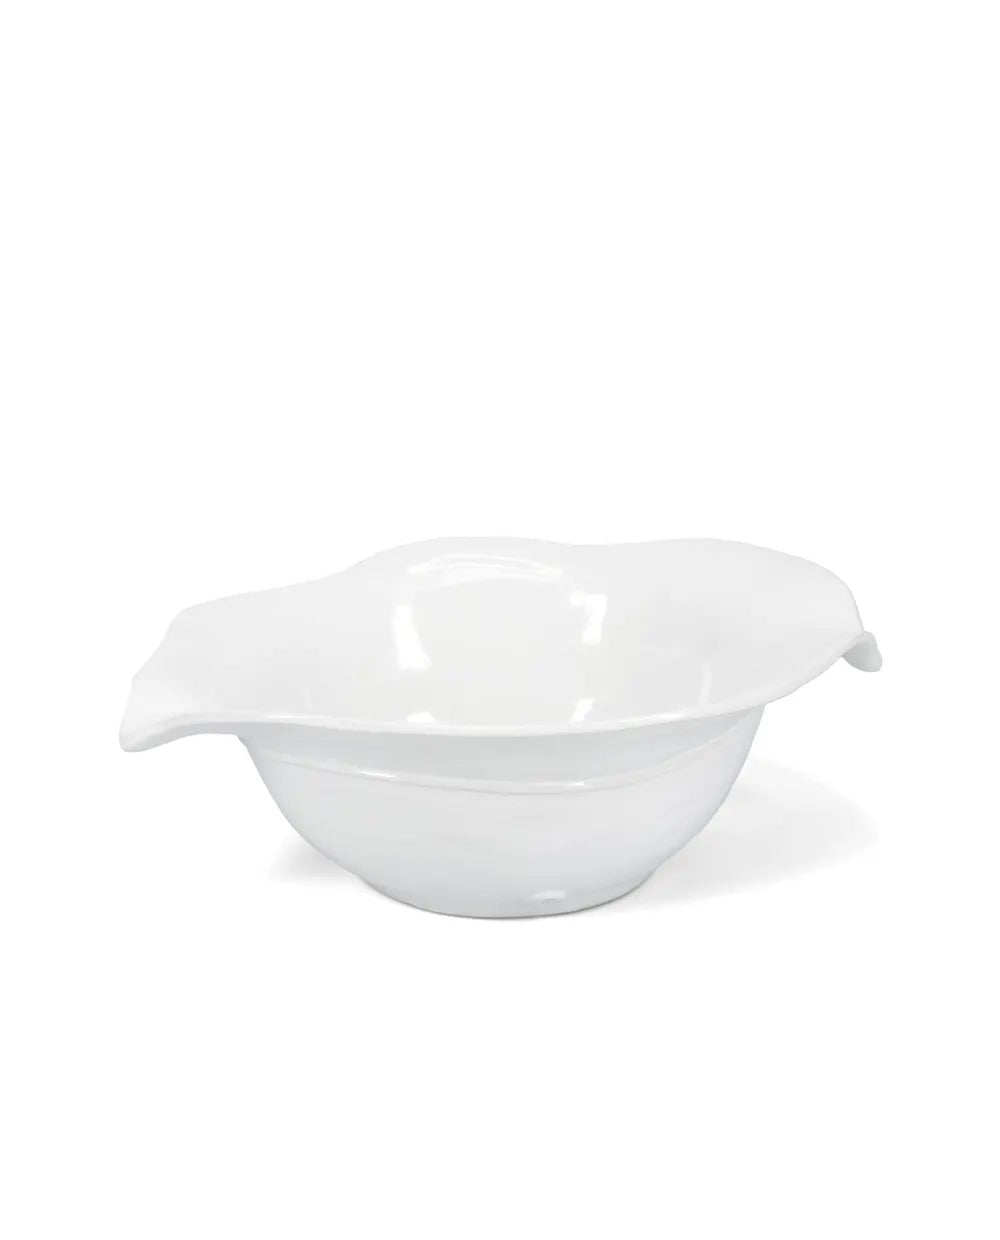 Handmade Ceramic Bowl 4675 by Montes Doggett